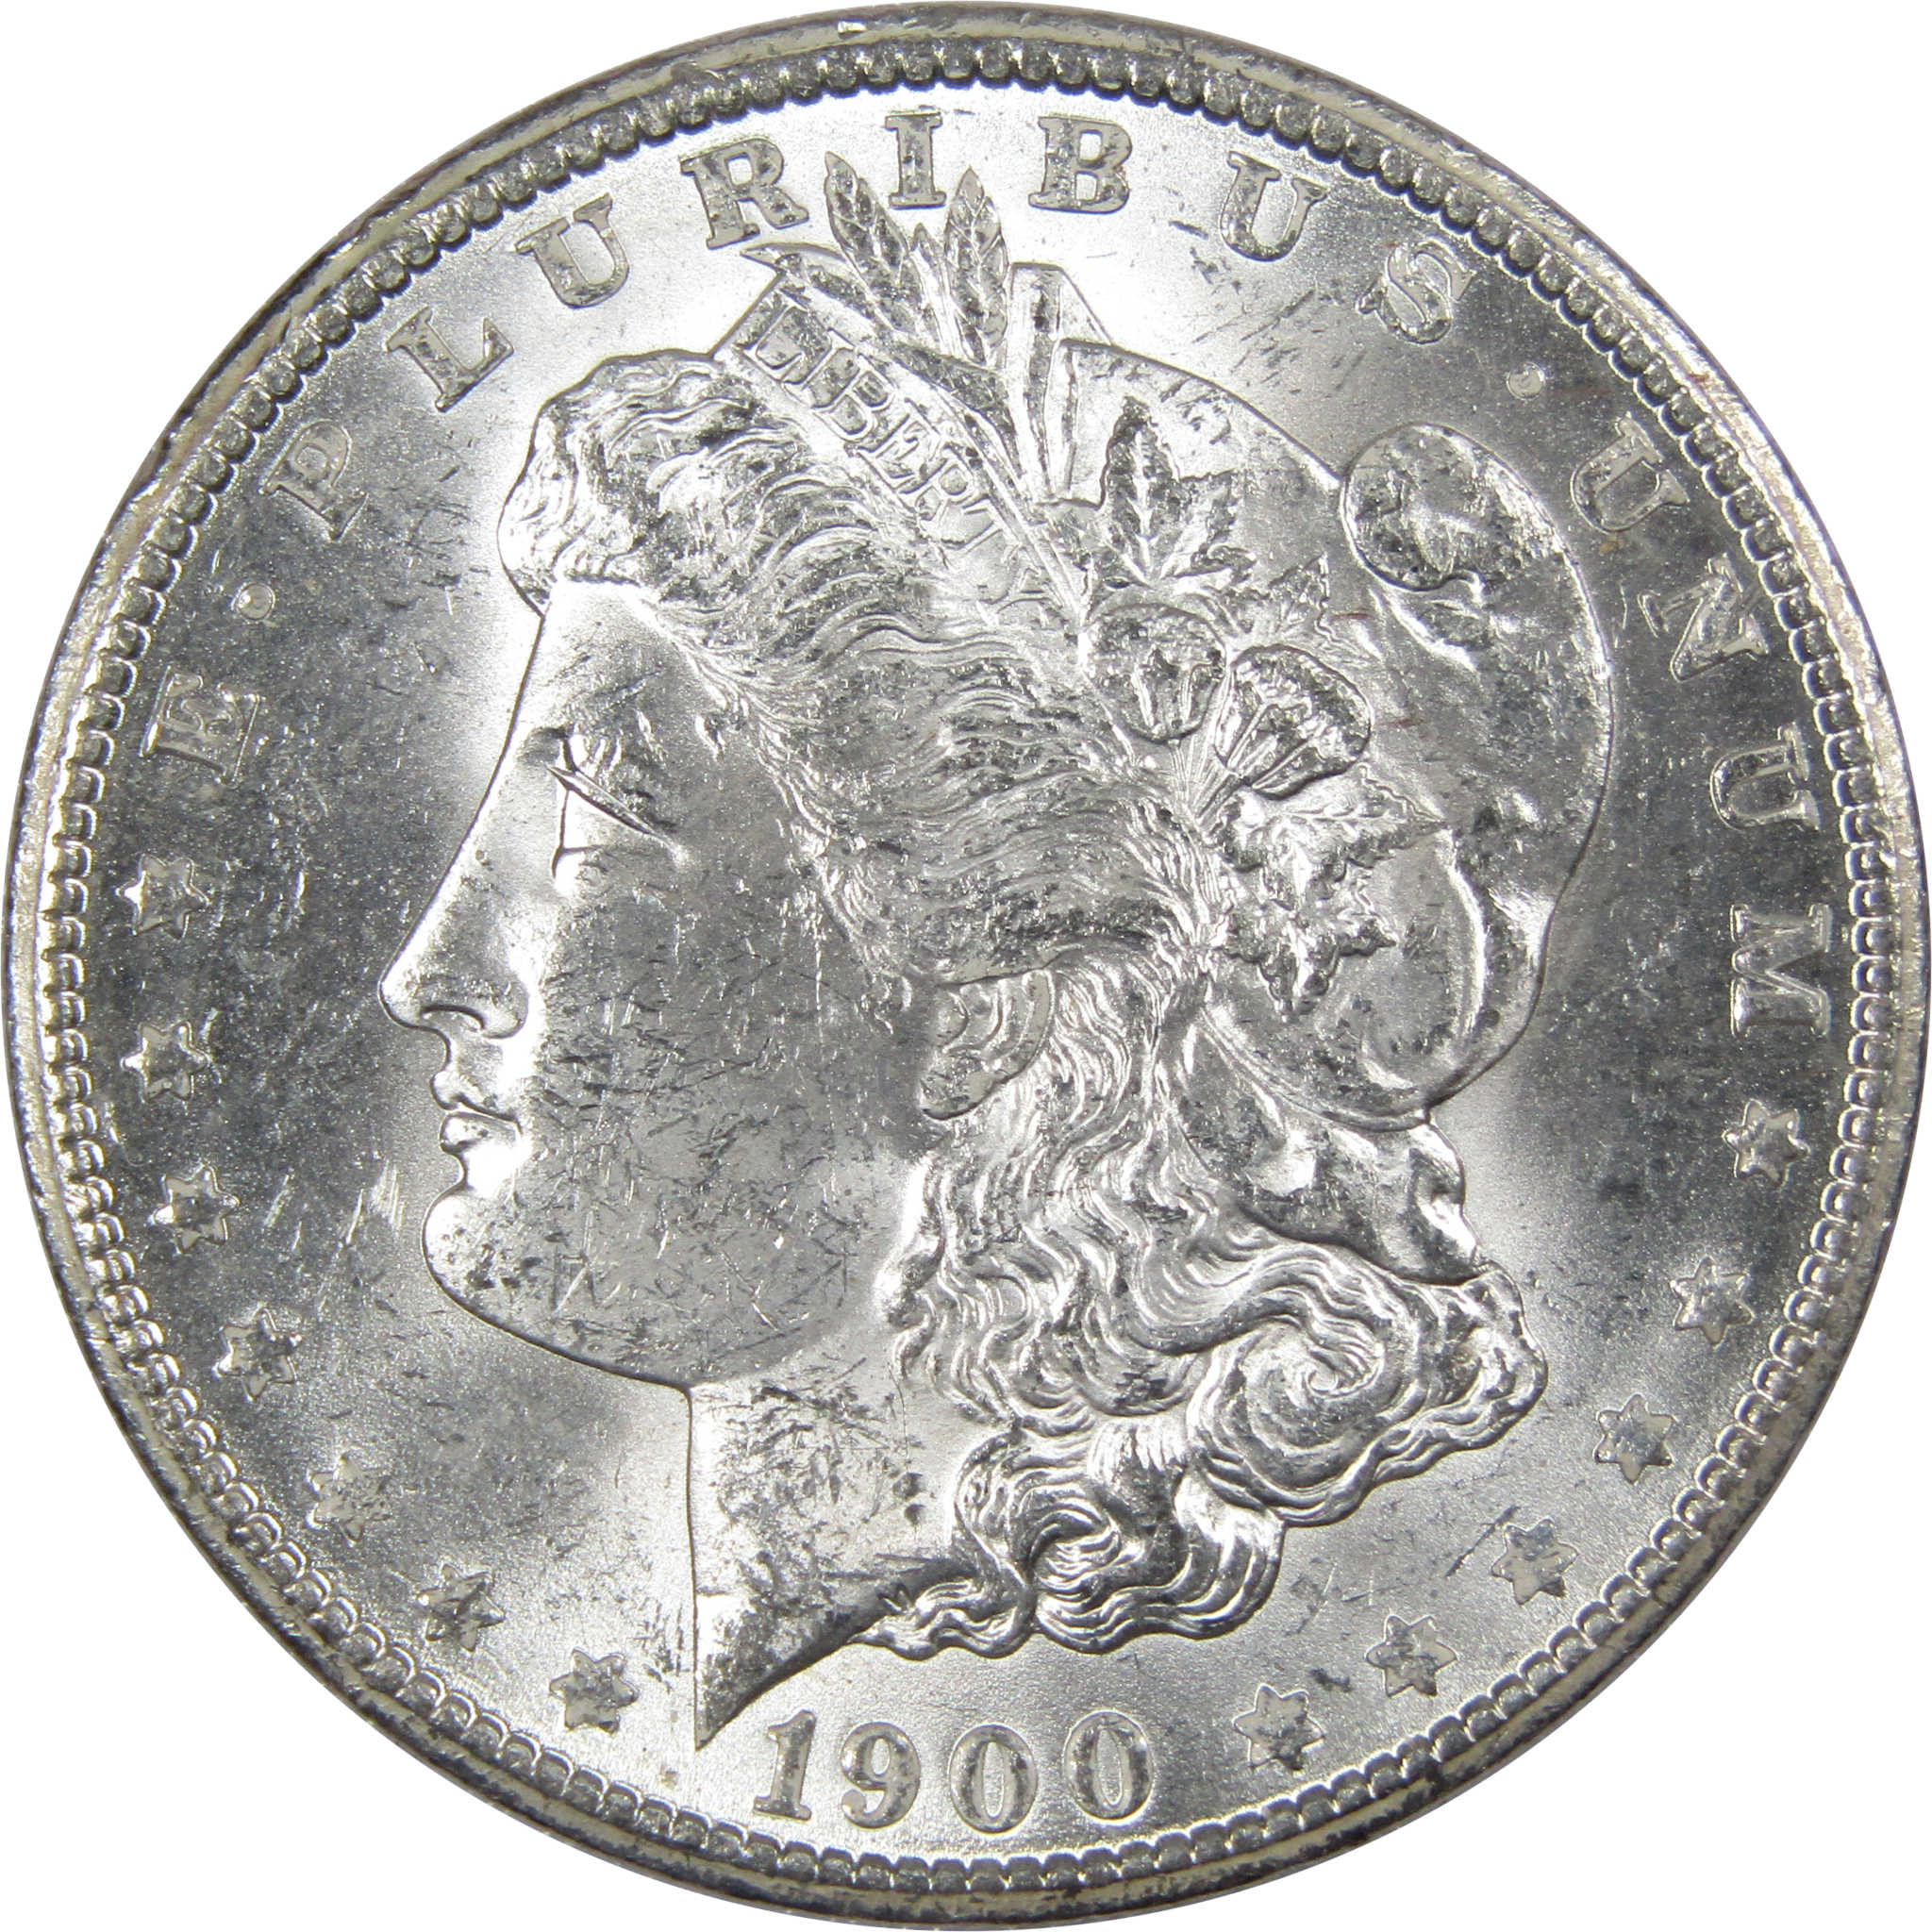 1900 O Morgan Dollar BU Uncirculated Mint State 90% Silver SKU:IPC9755 - Morgan coin - Morgan silver dollar - Morgan silver dollar for sale - Profile Coins &amp; Collectibles